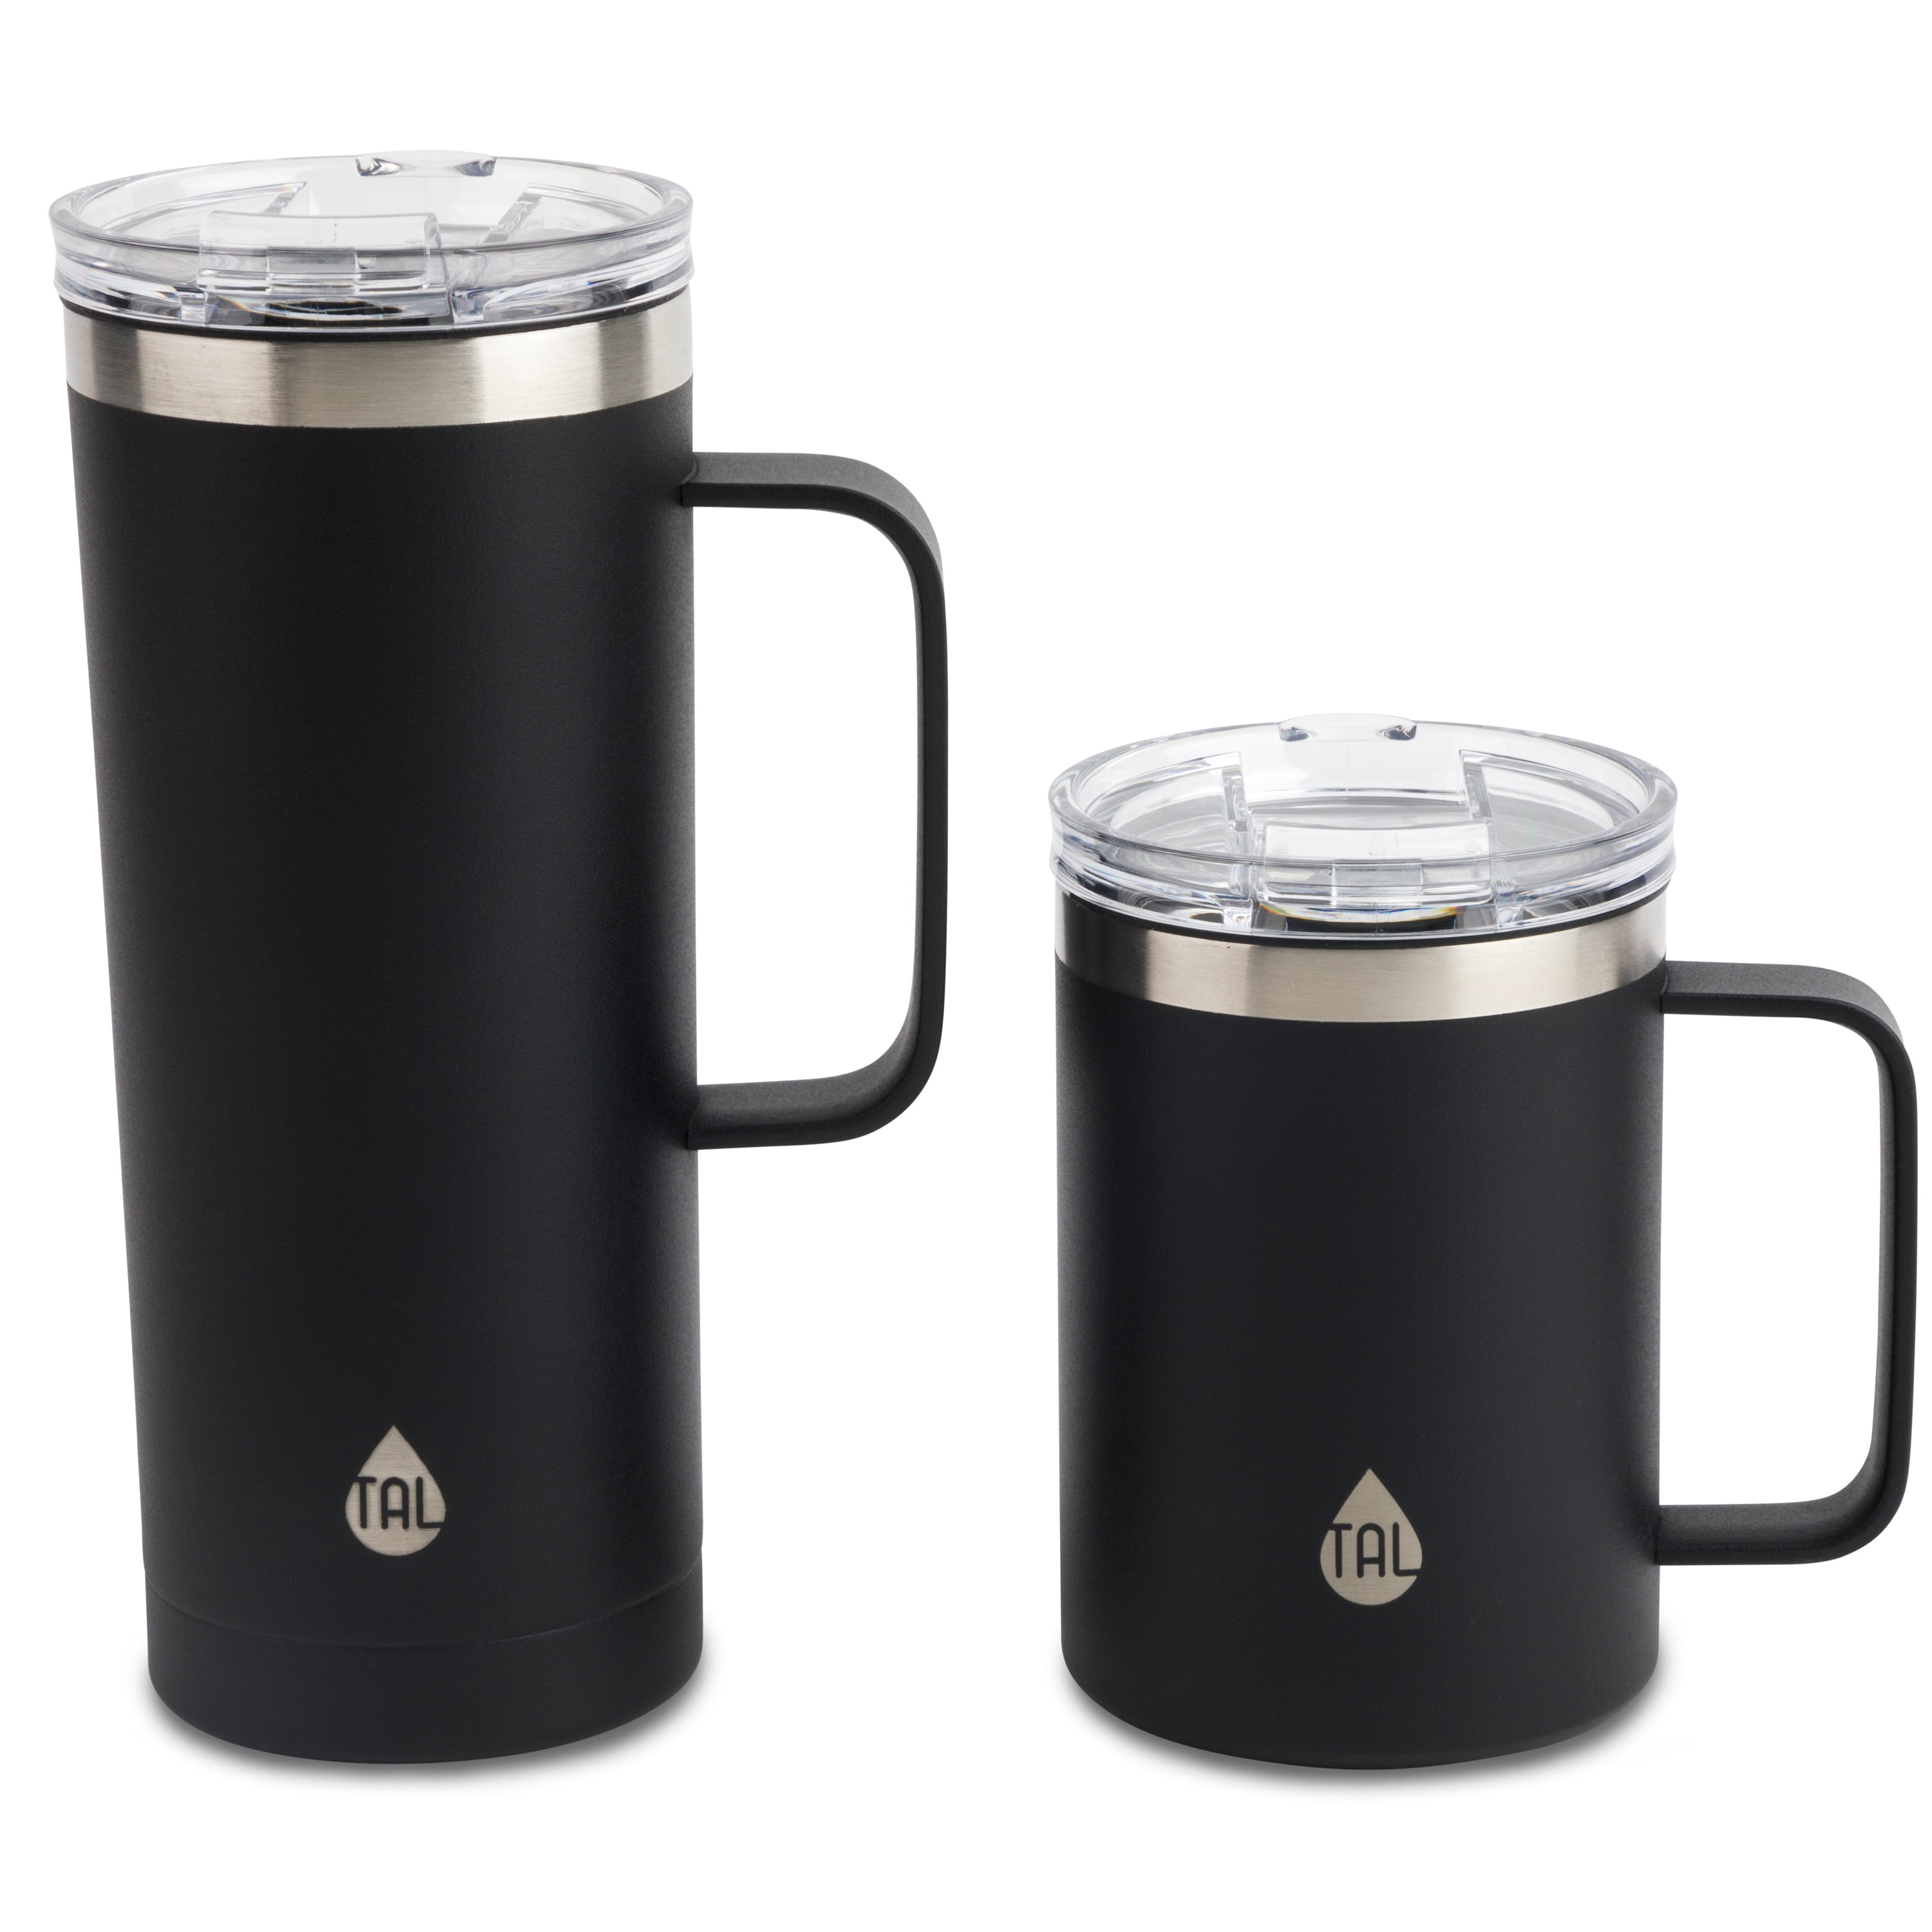 Tal Stainless Steel Brew Coffee Mug 15 fl oz, Sage